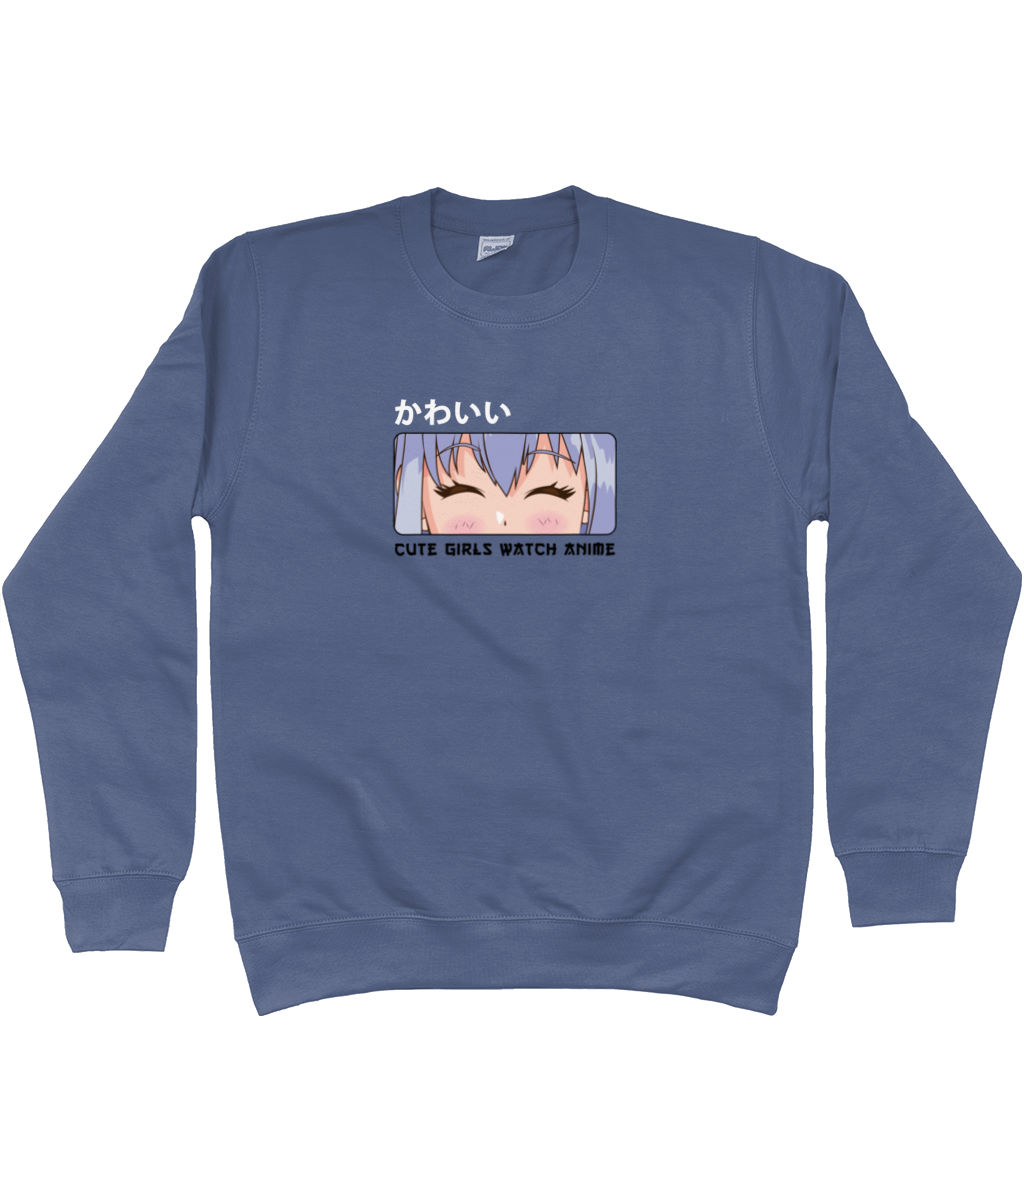 Cute Girls Watch Anime Sweatshirt